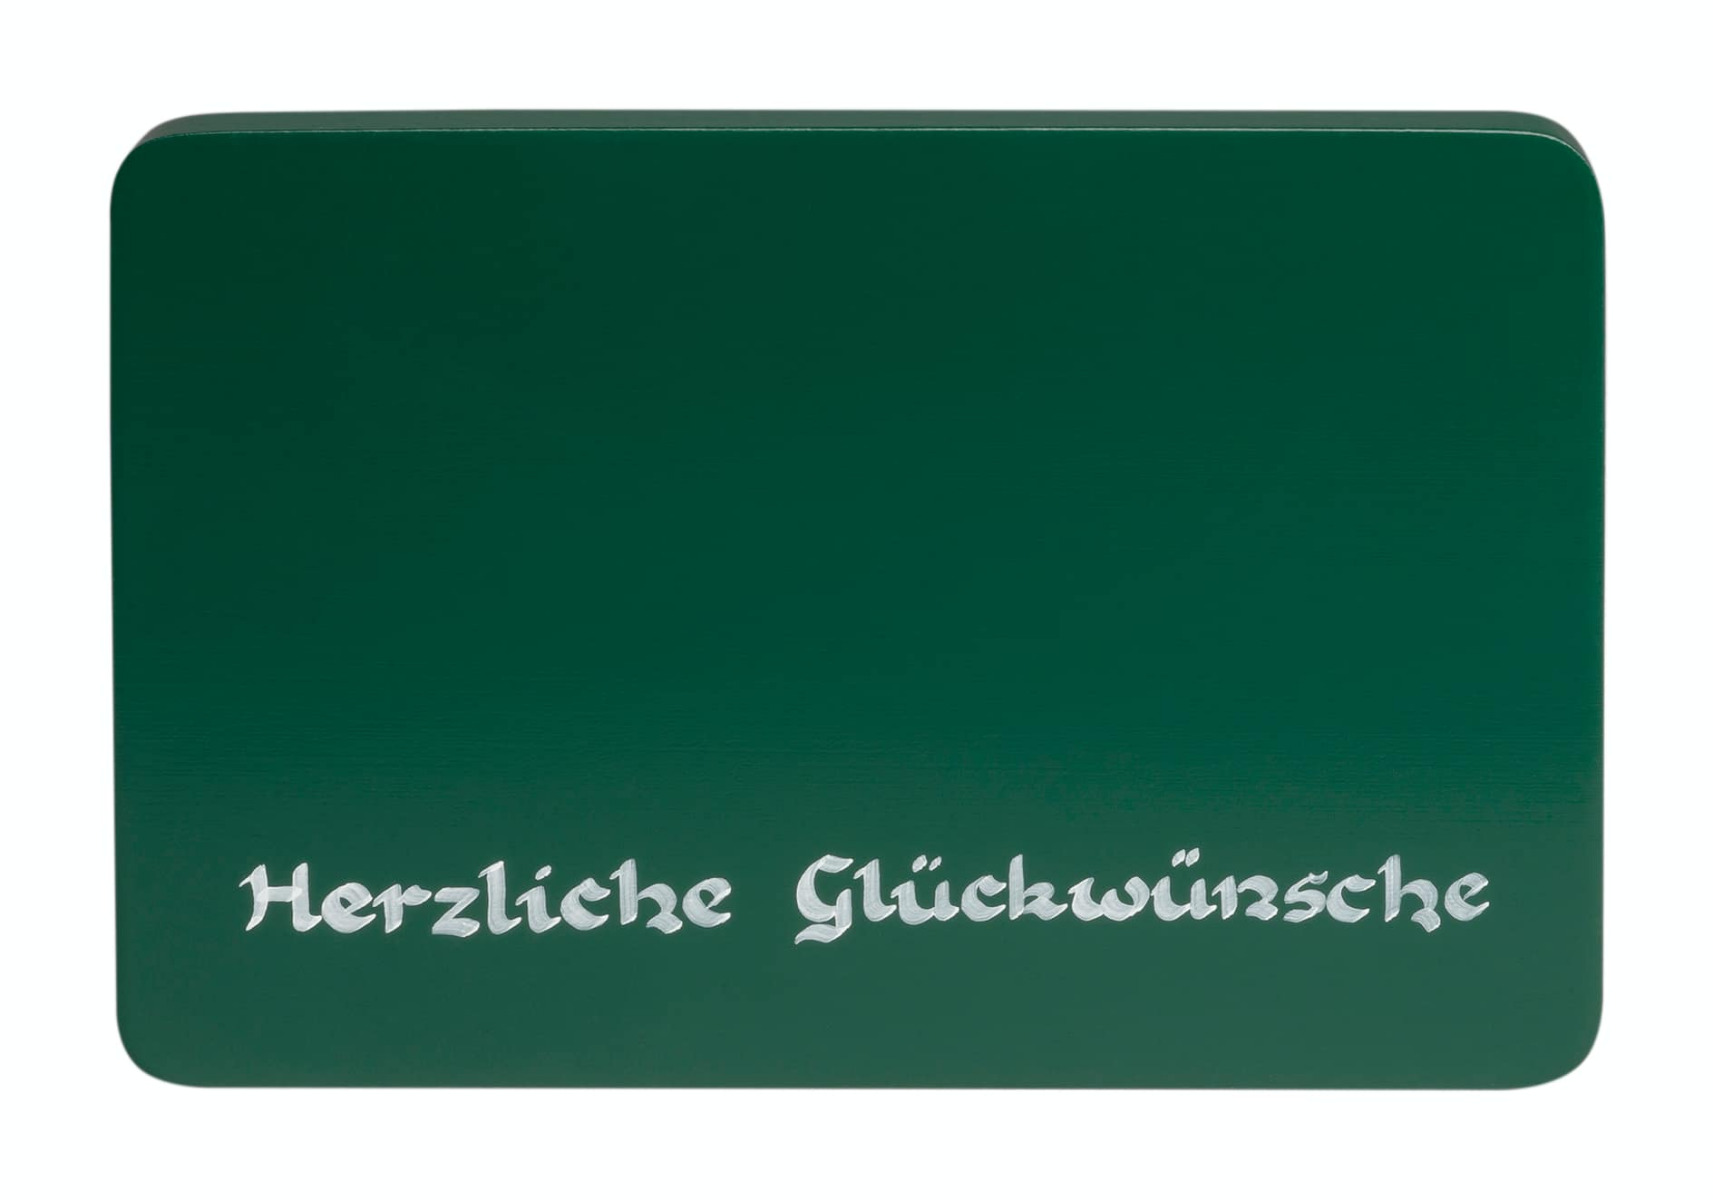 Beschriftete Sockelplatte, grün, "Herzliche Glückwünsche"